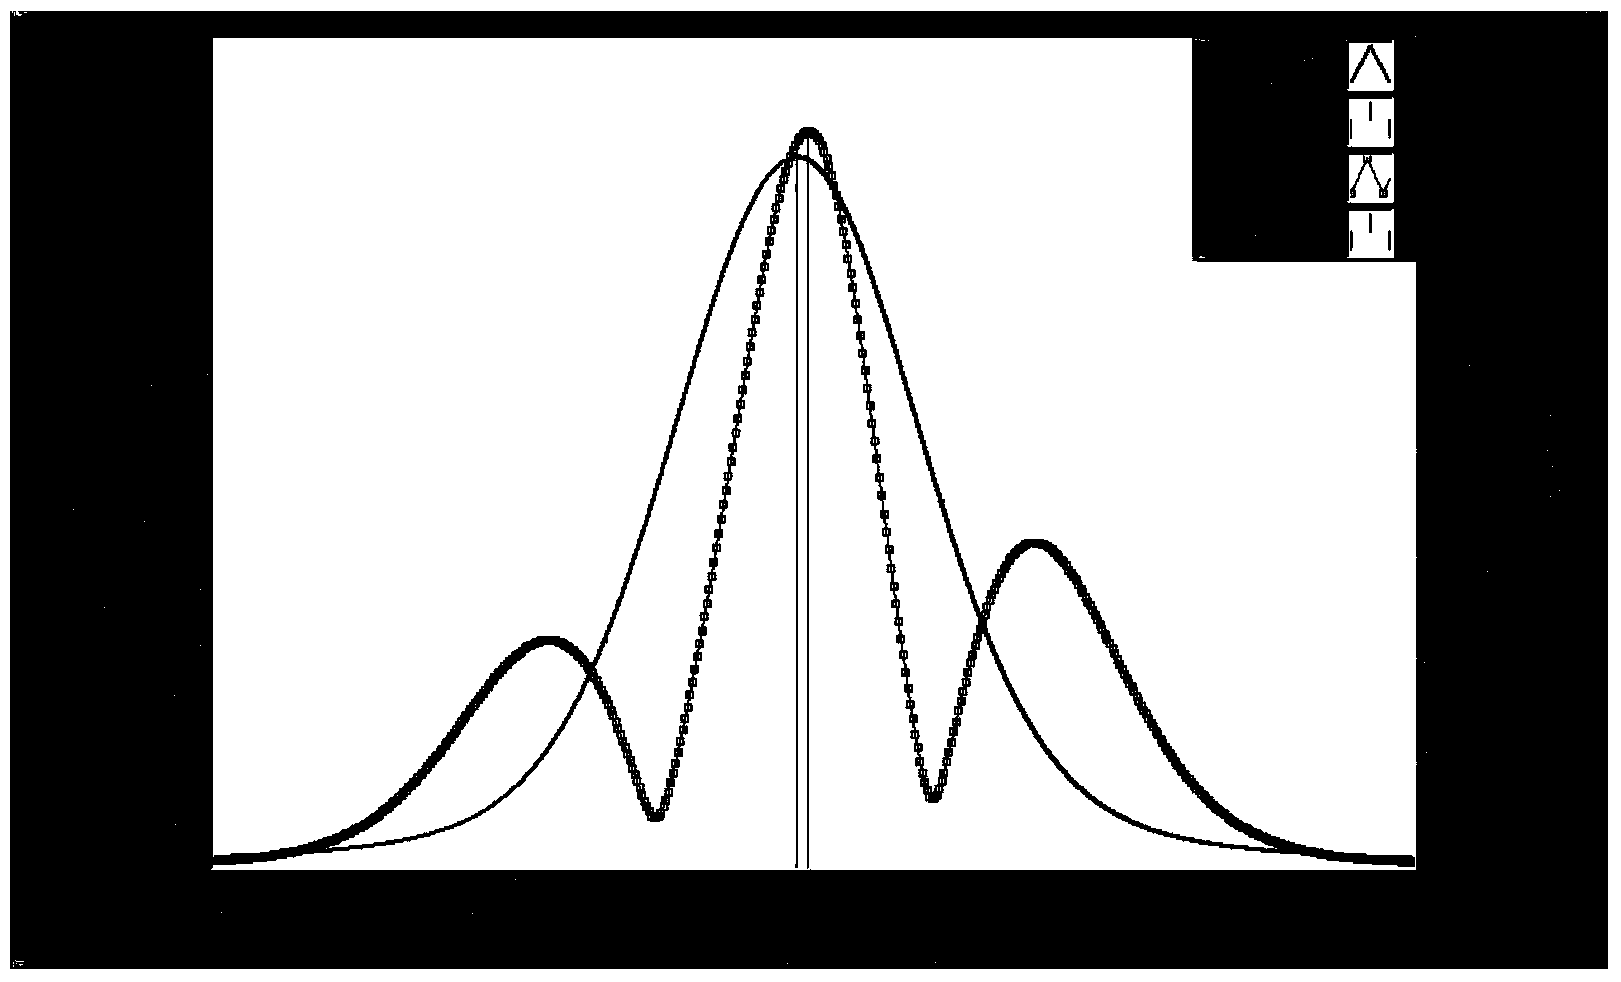 Calibration-free modulation spectrum measuring system